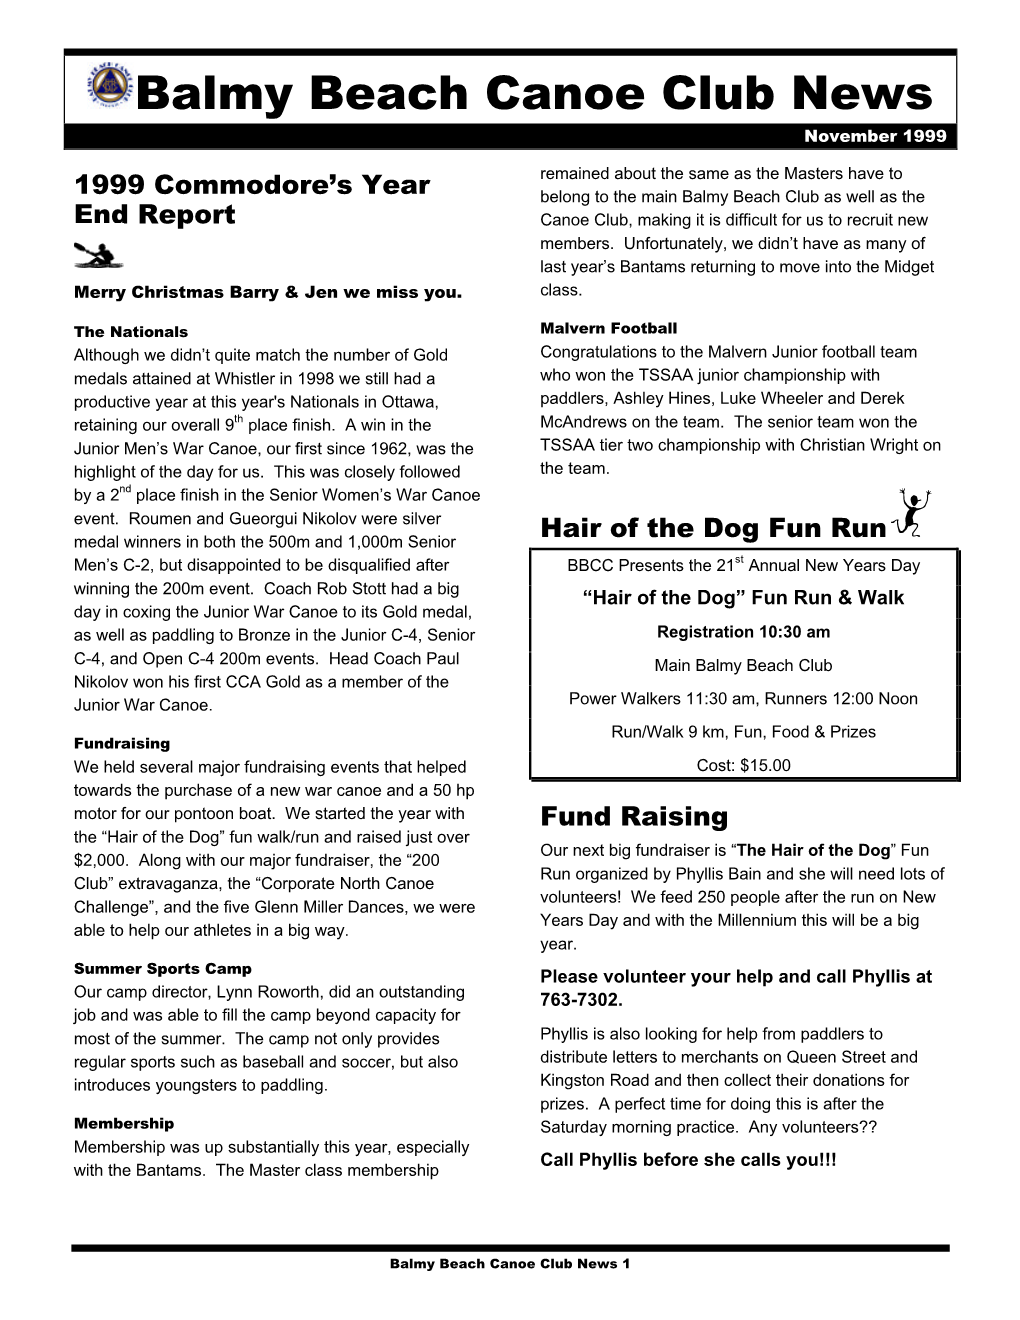 Balmy Beach Canoe Club News November 1999